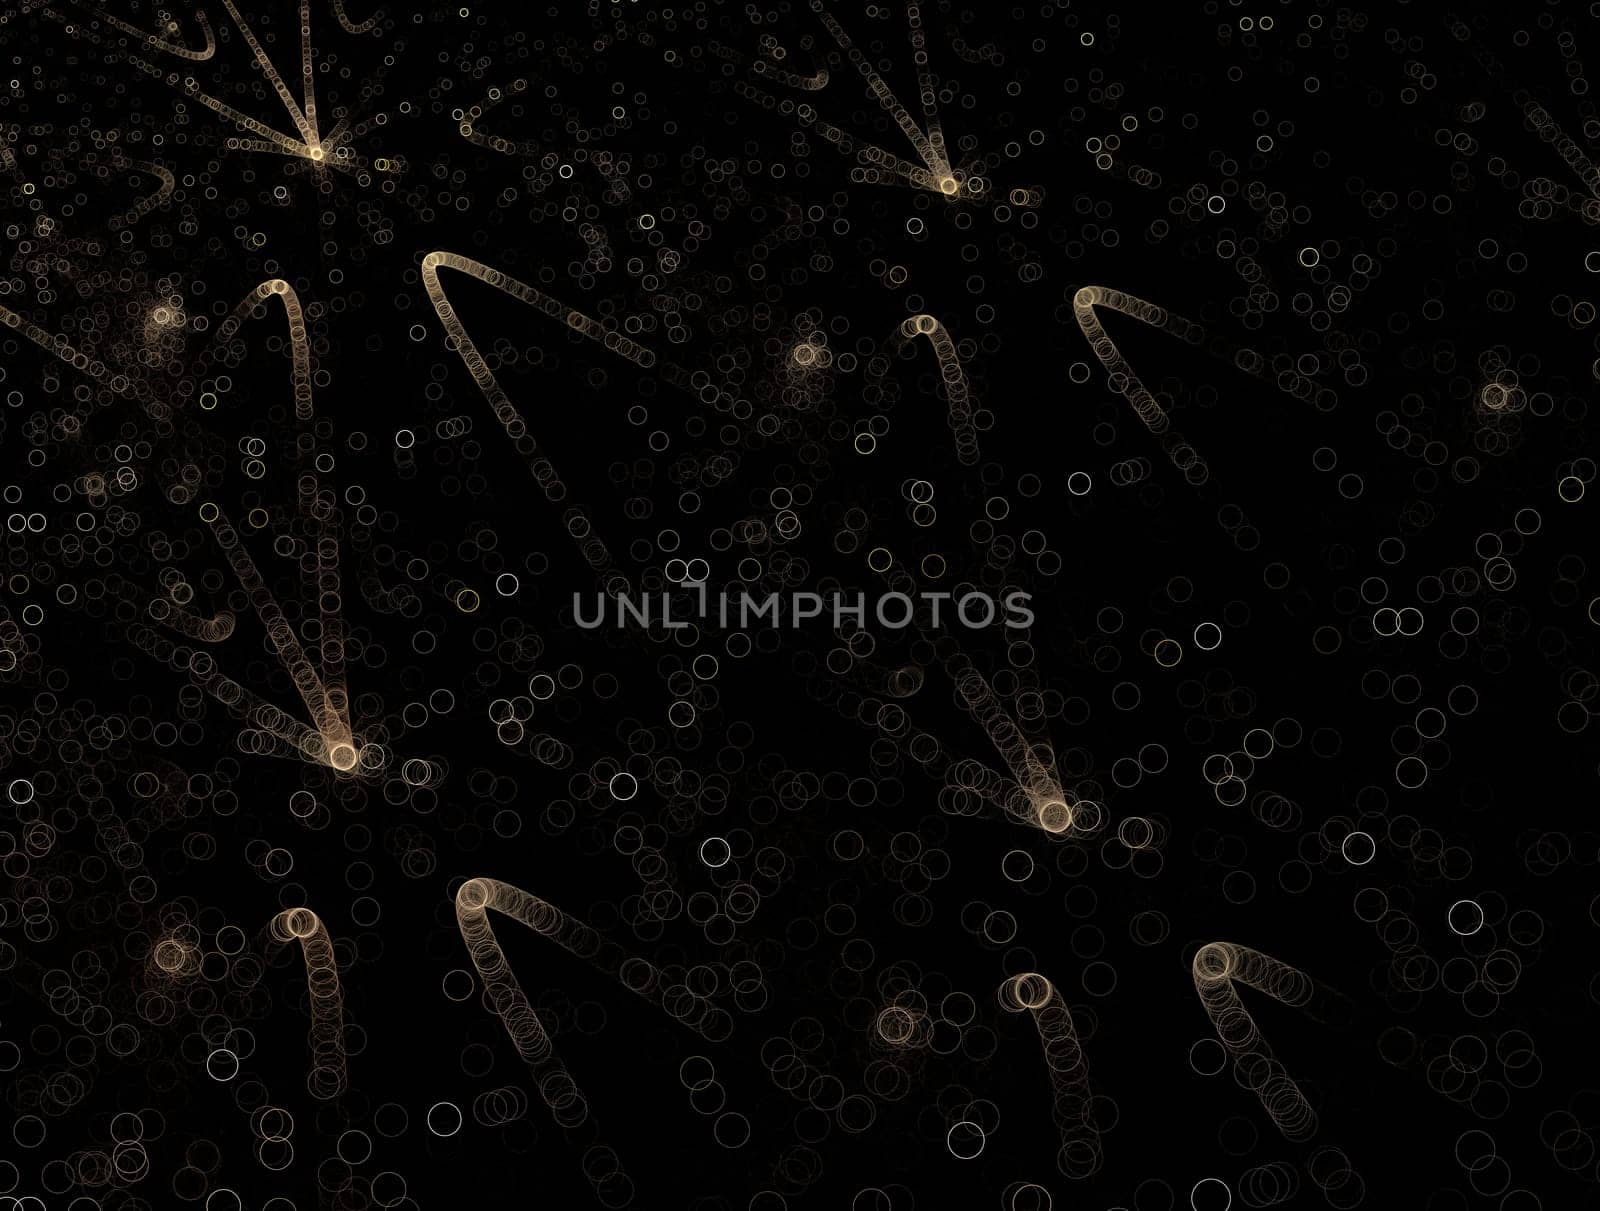 Imaginatory fractal abstract background Image by nikitabuida